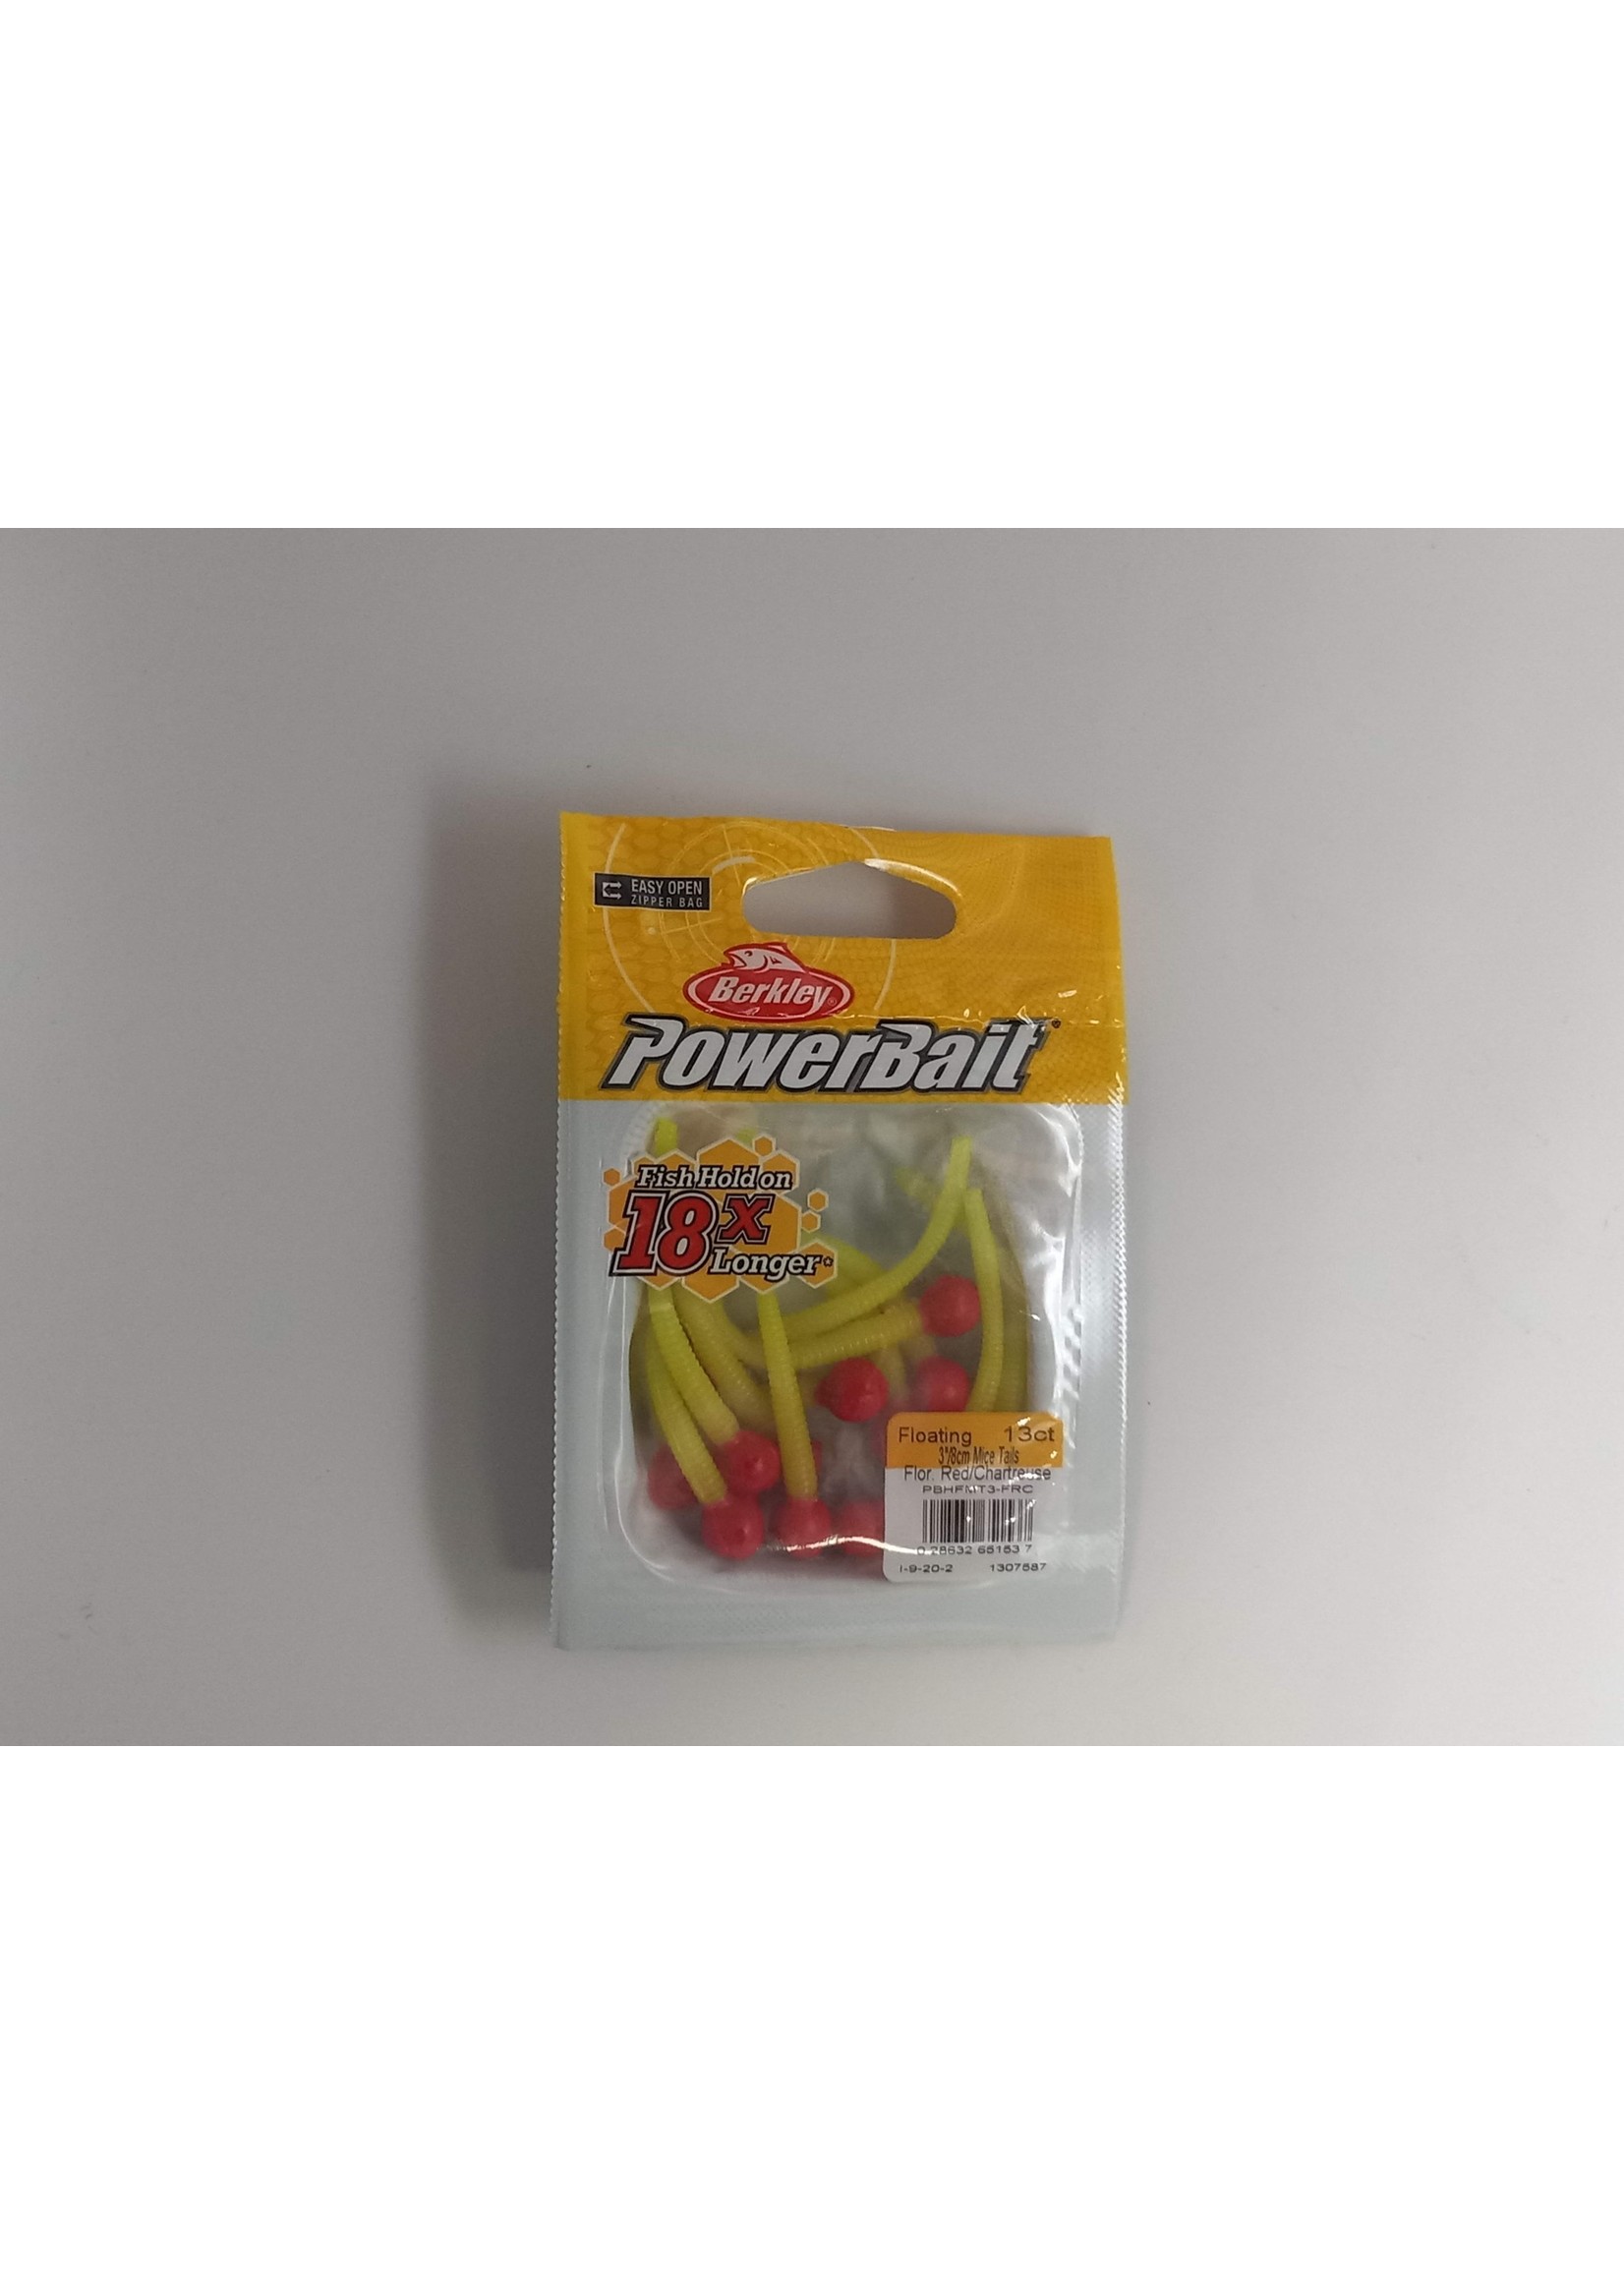 Berkley PowerBait Floating Mice Tails 1307587 Half Bag Fluor Red/Chartreuse